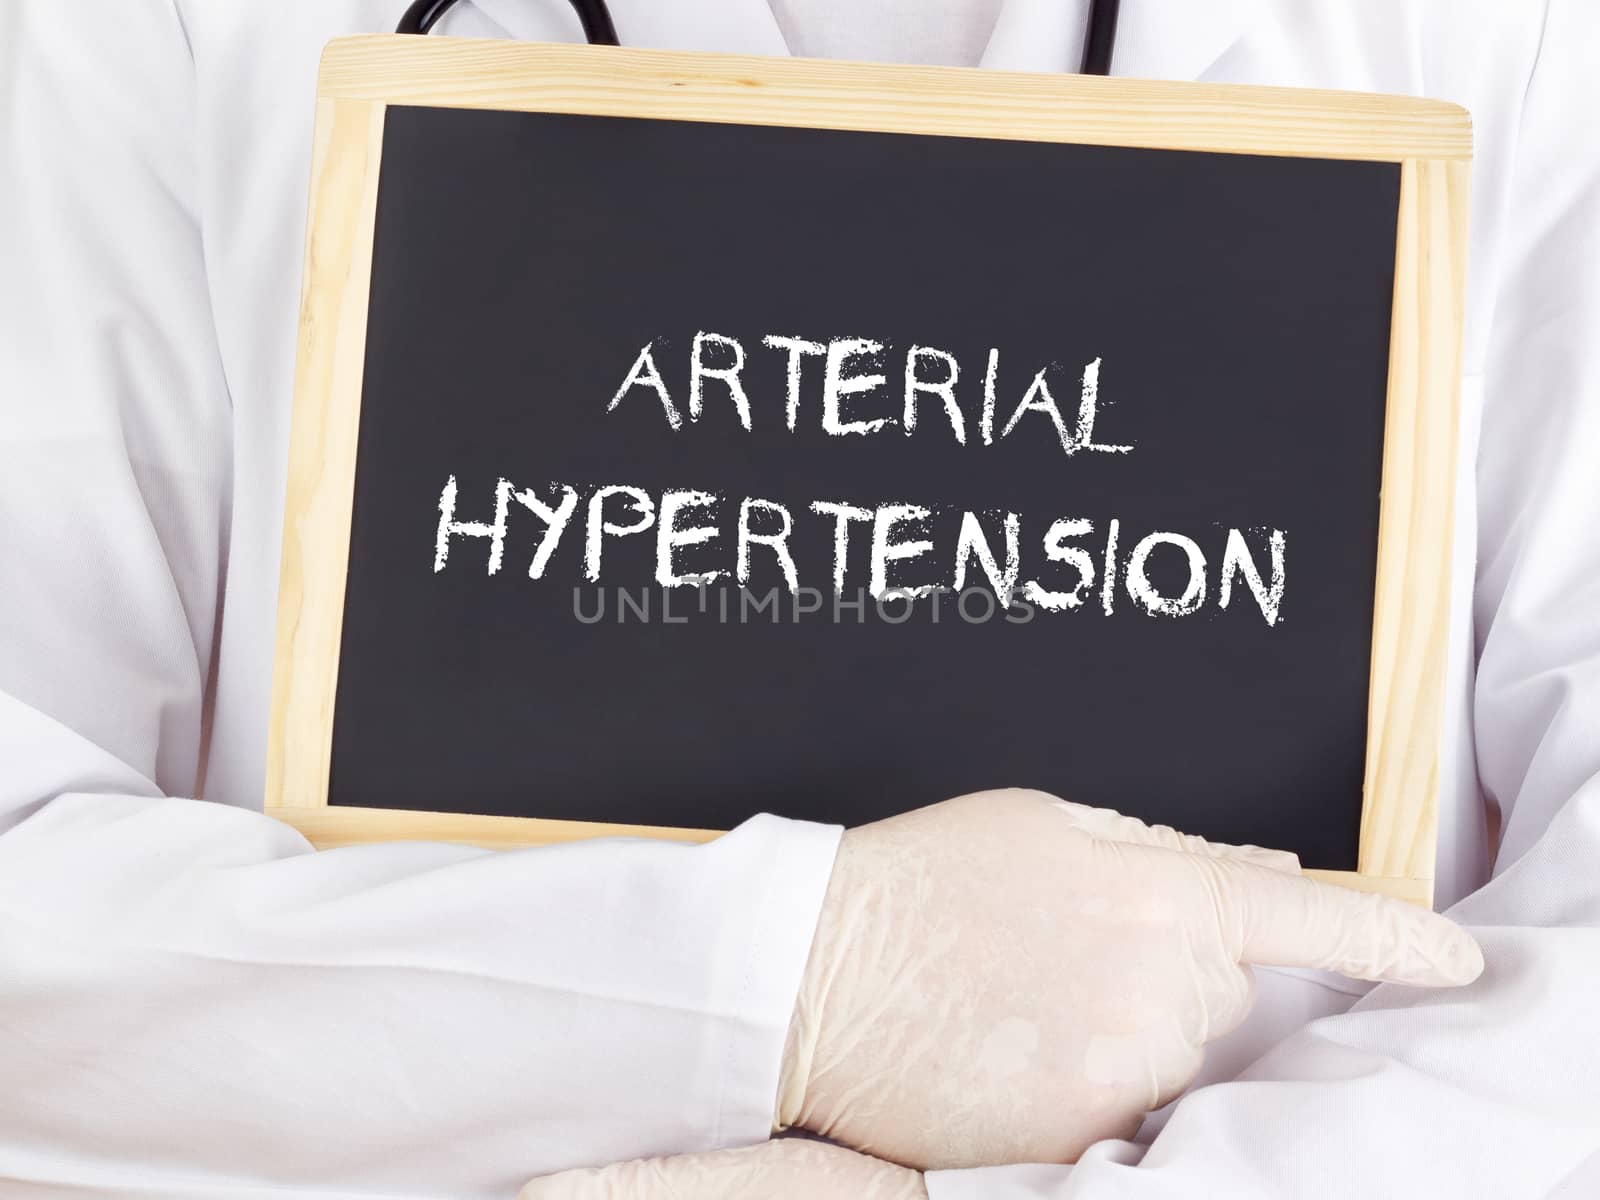 Doctor shows information: arterial hypertension